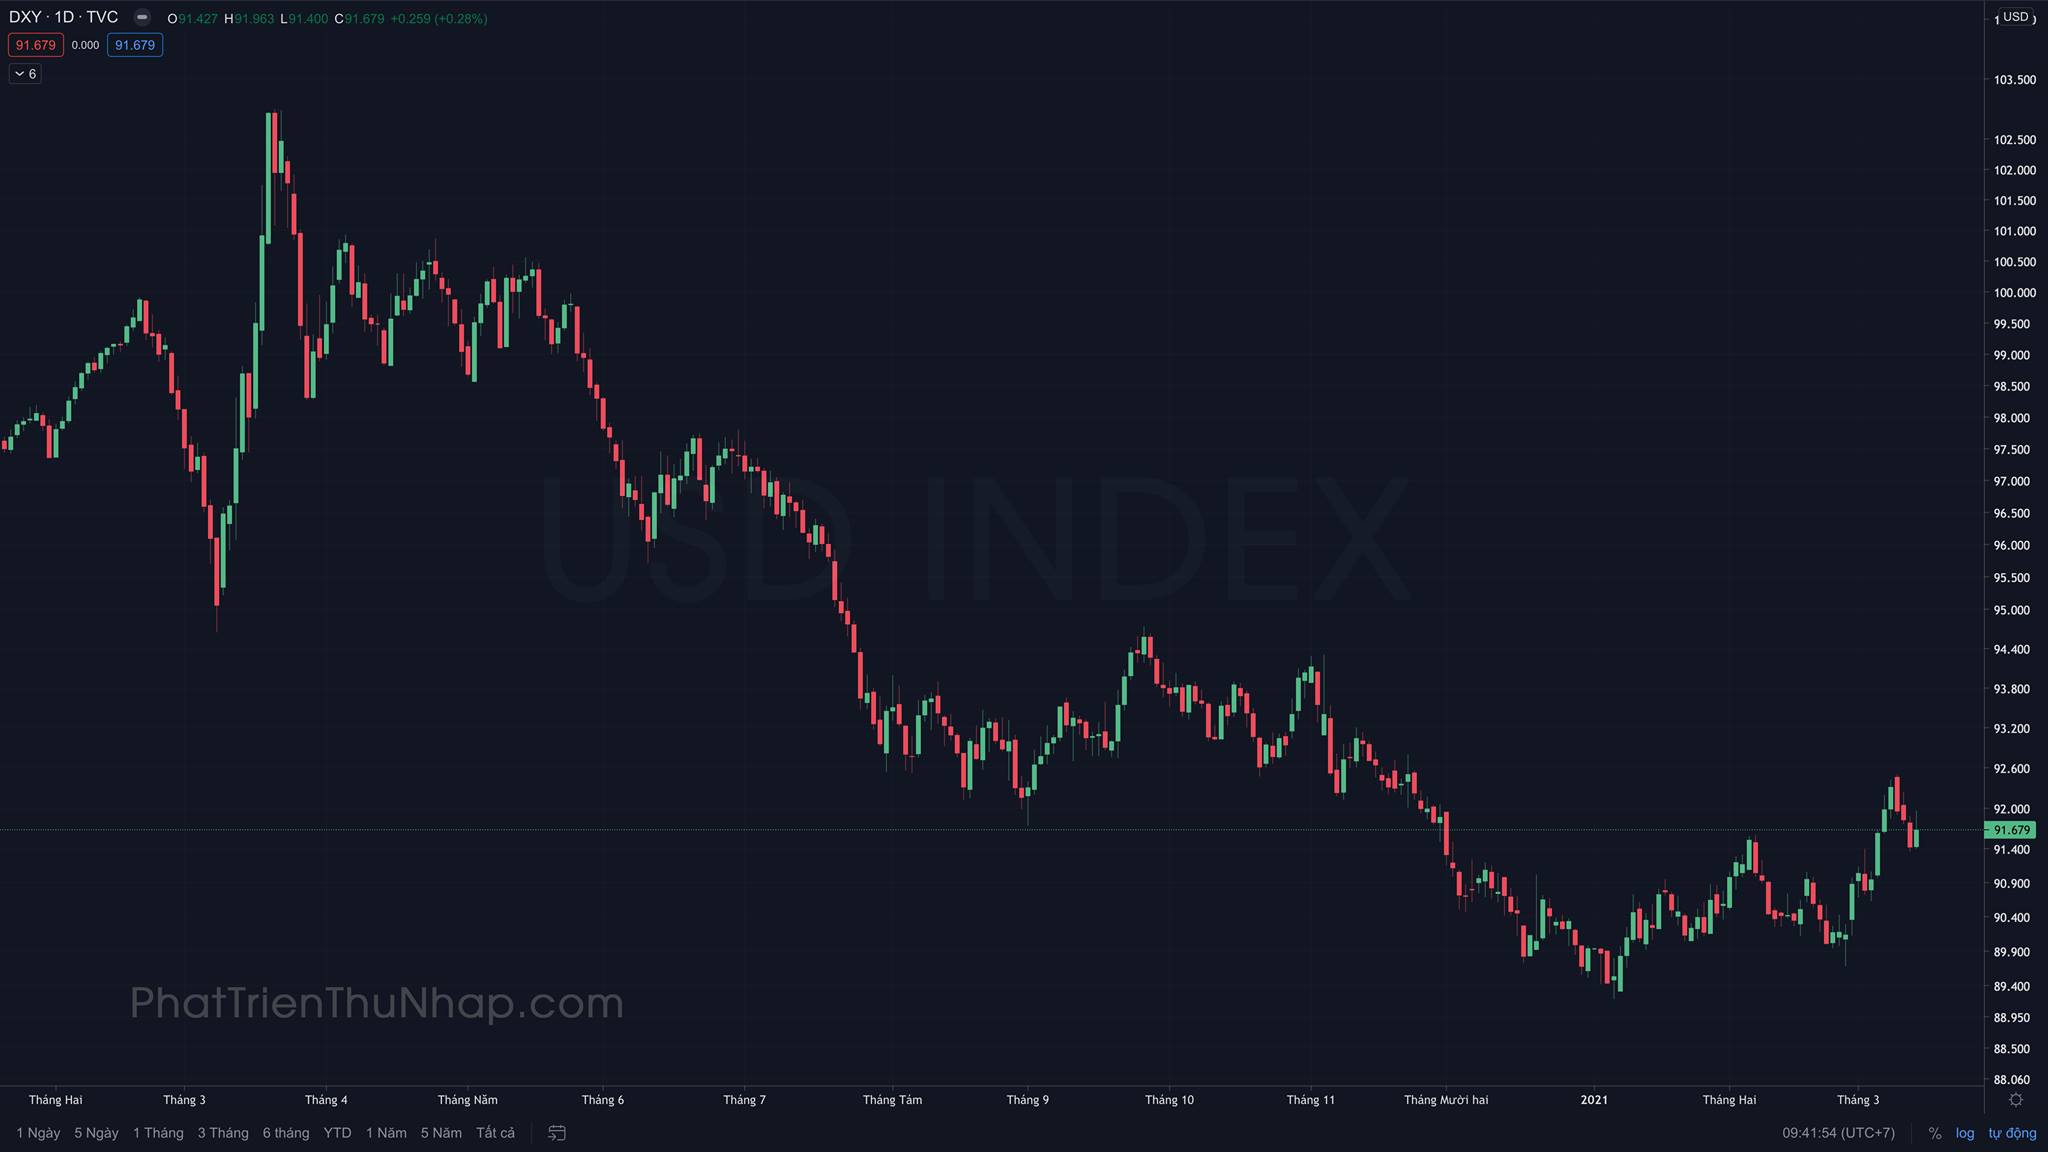 usd-index-chart-phattrienthunhap-com.jpeg